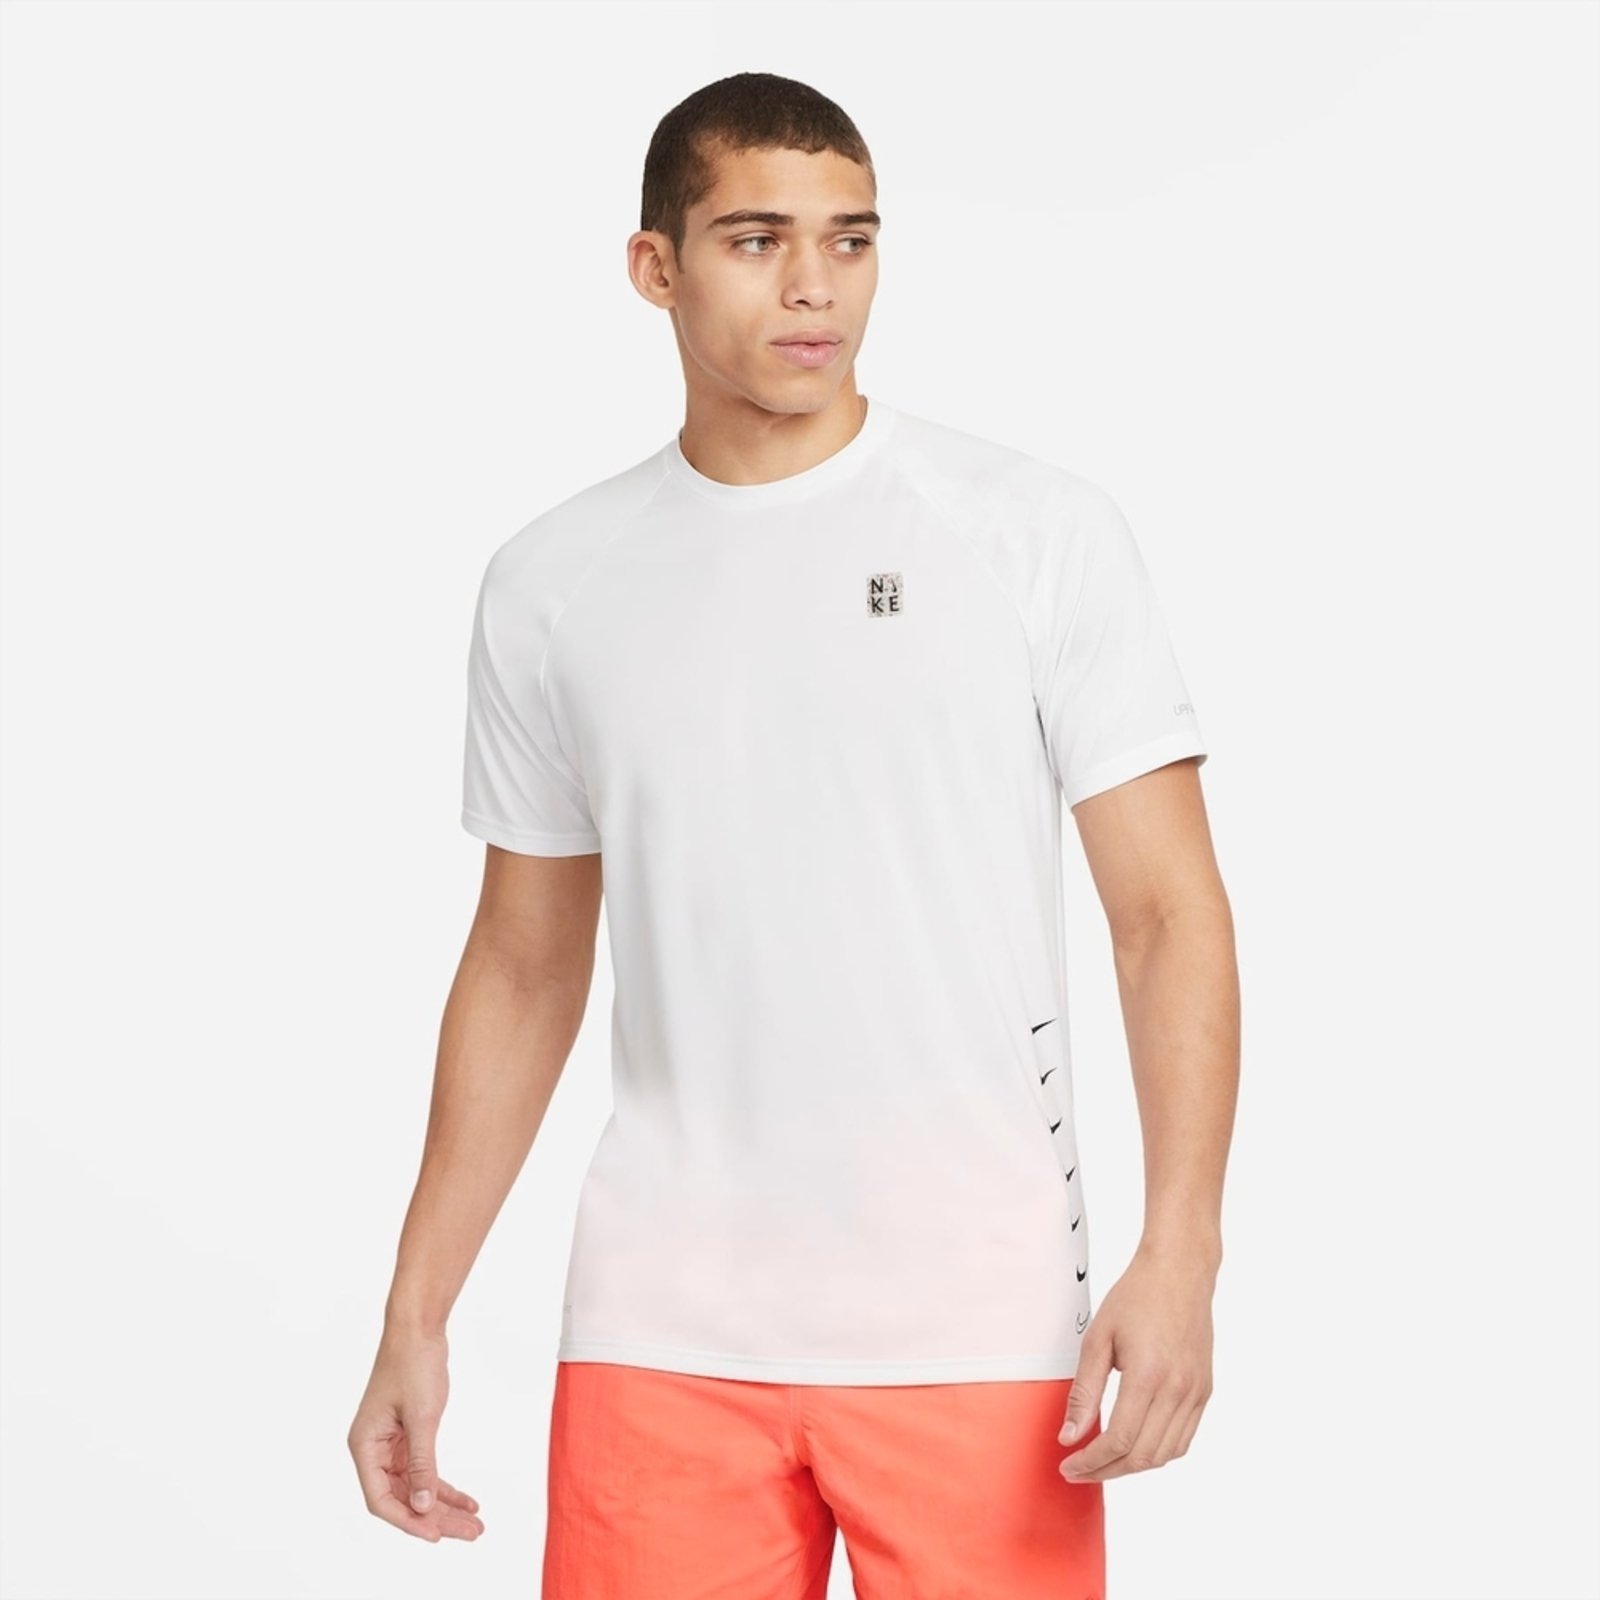 Camiseta Regata Nike Hydroguard Proteçao Uv 40 Masculina - Branco